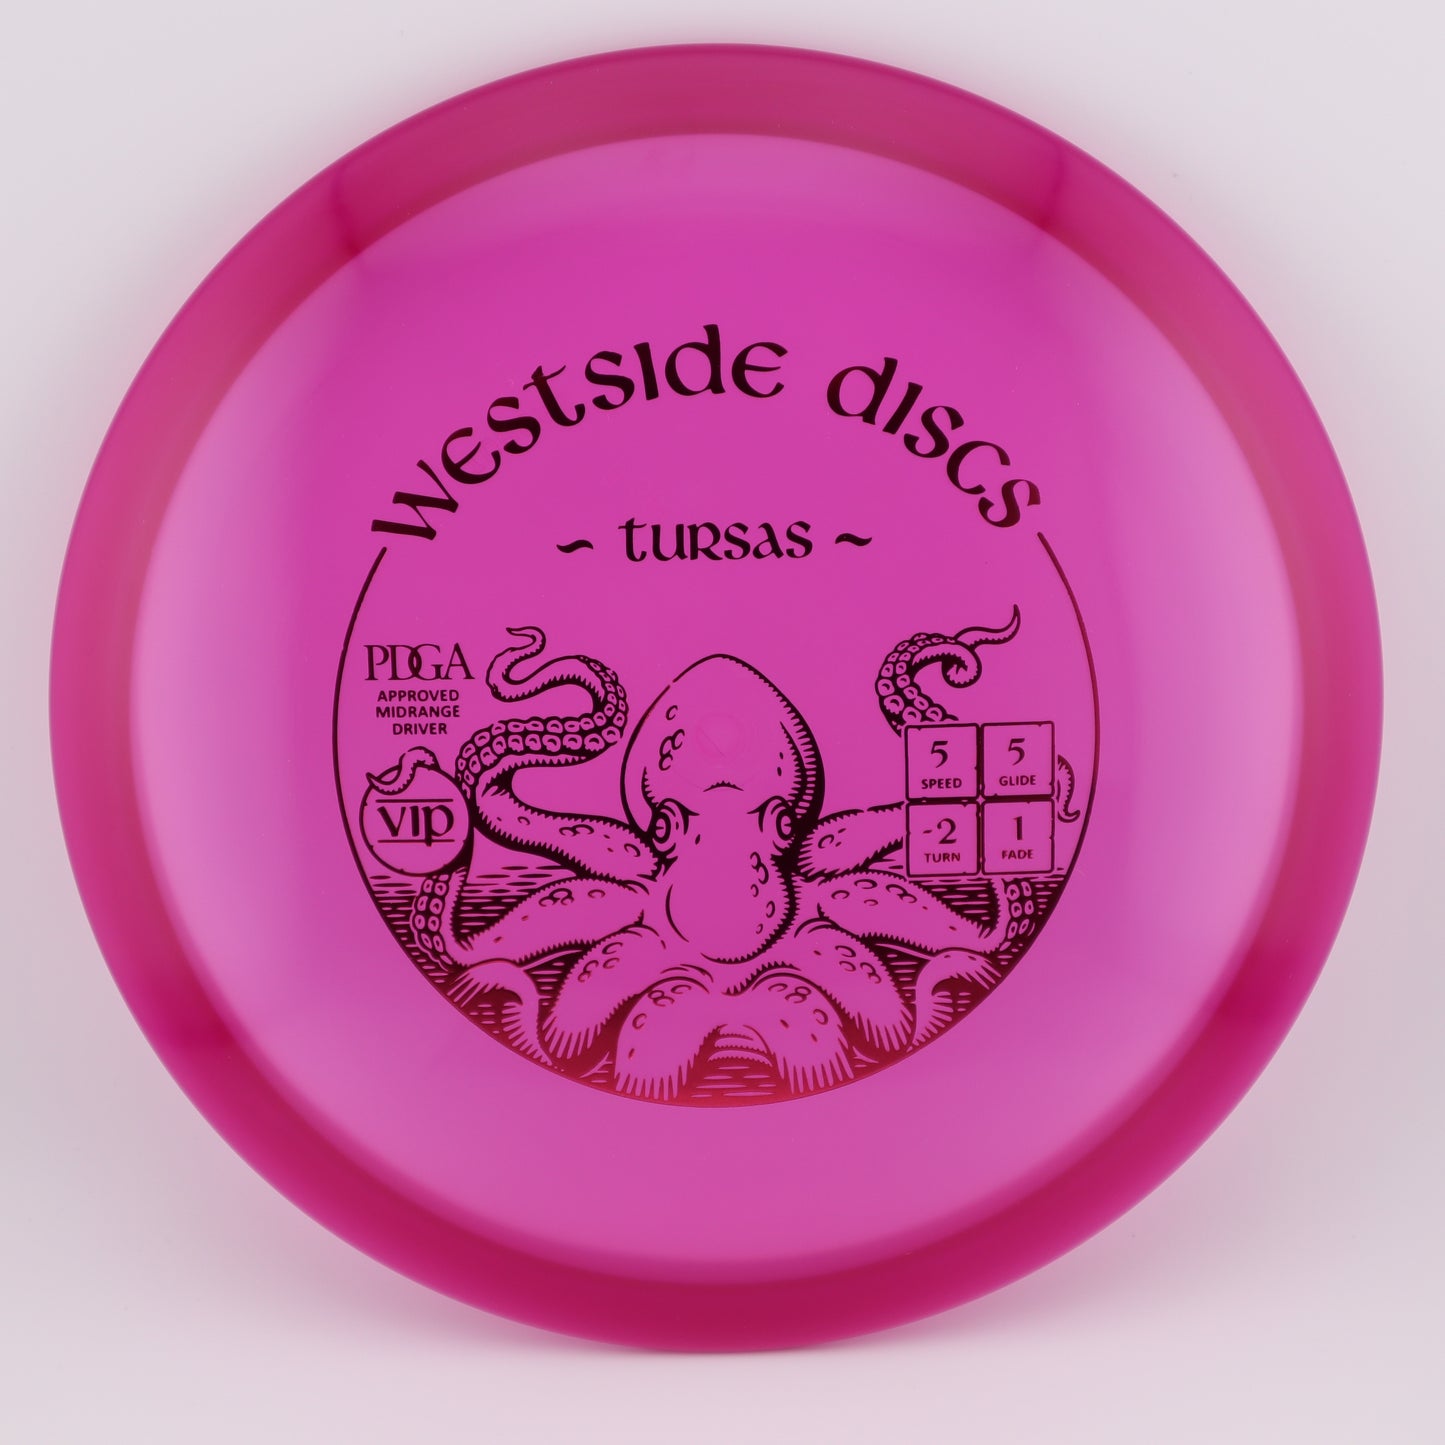 Westside Discs Tursas Understable Midrange Disc Golf